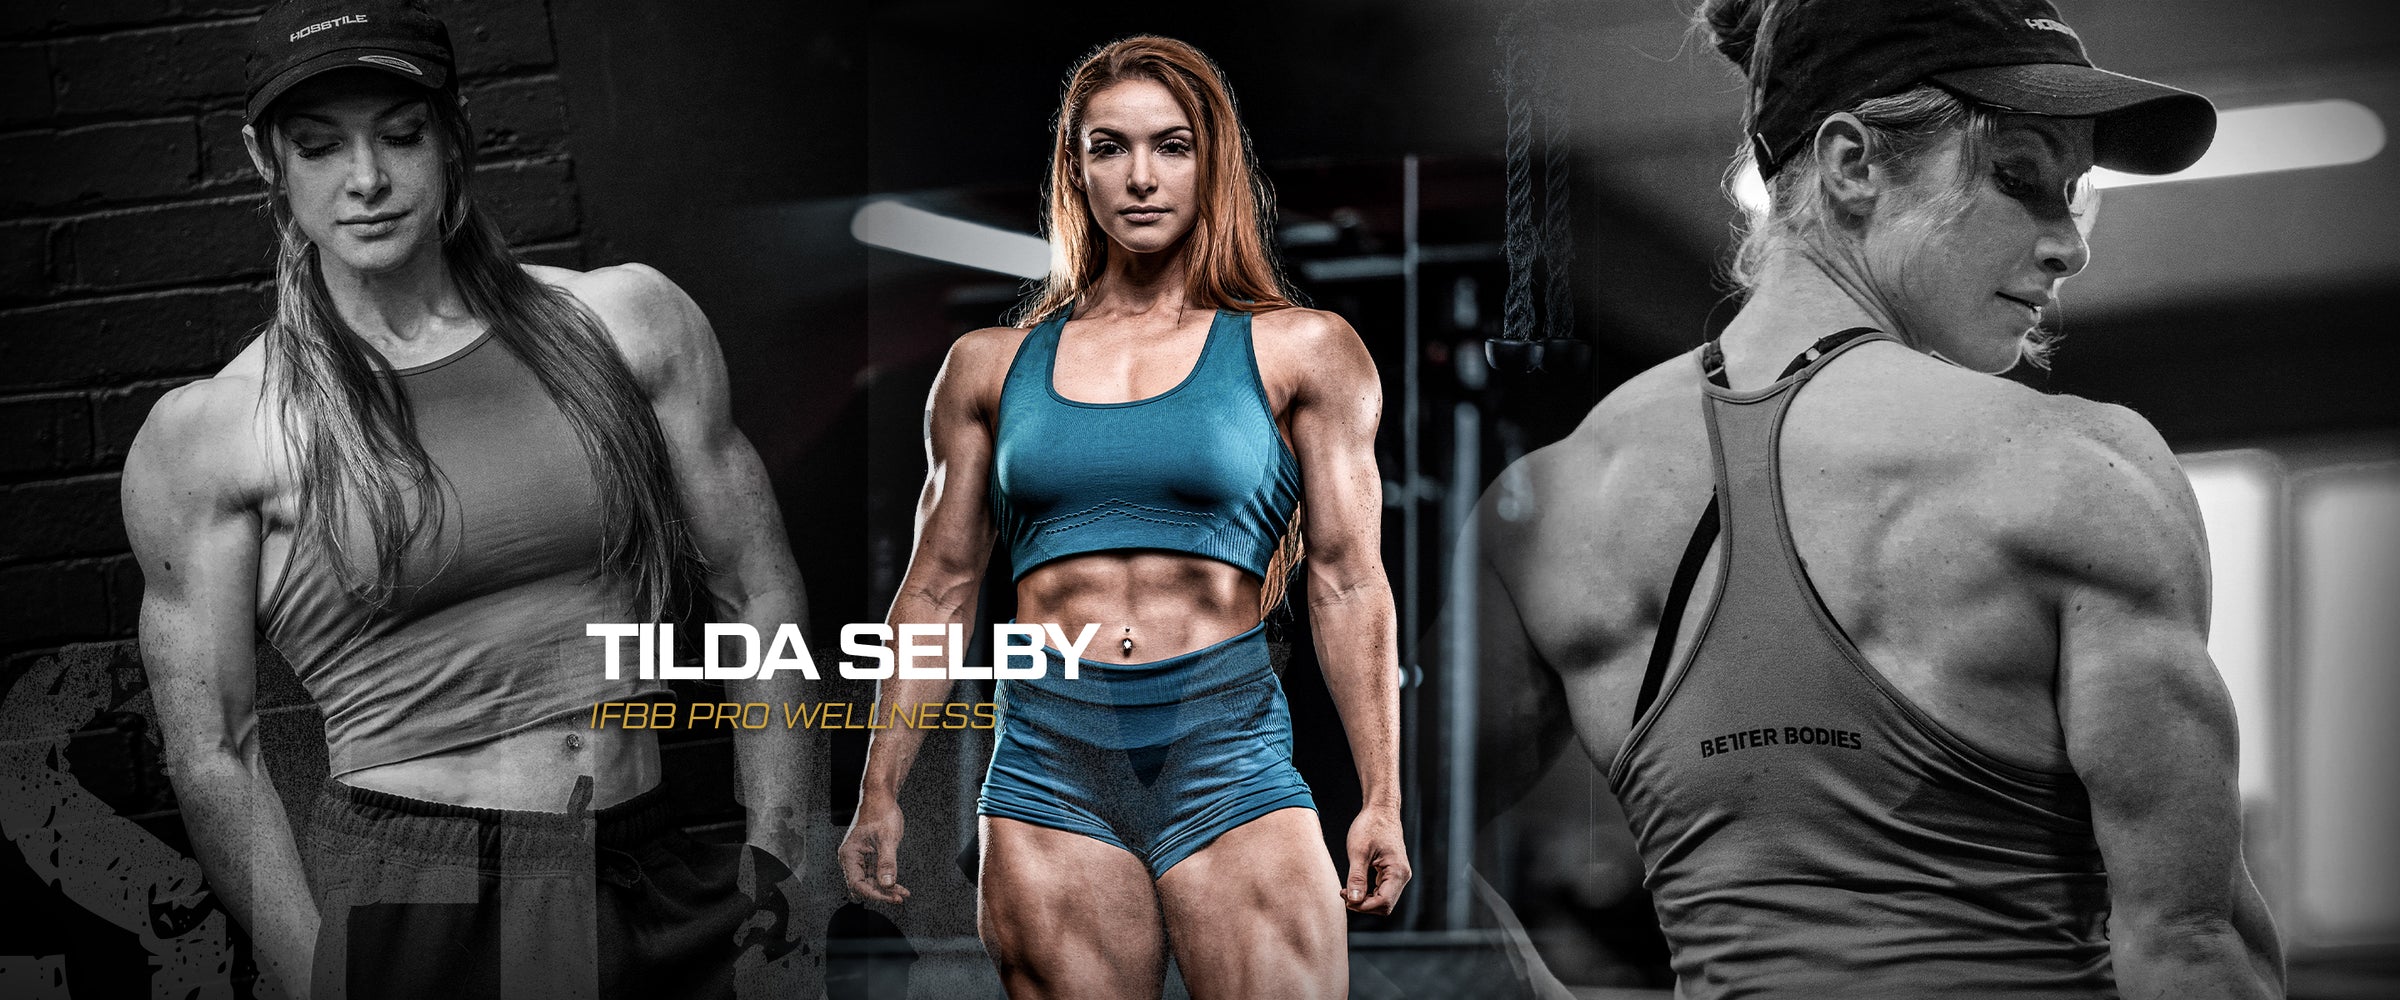 Hosstile Athlete Tilda Selby IFBB Pro Wellness Competitor